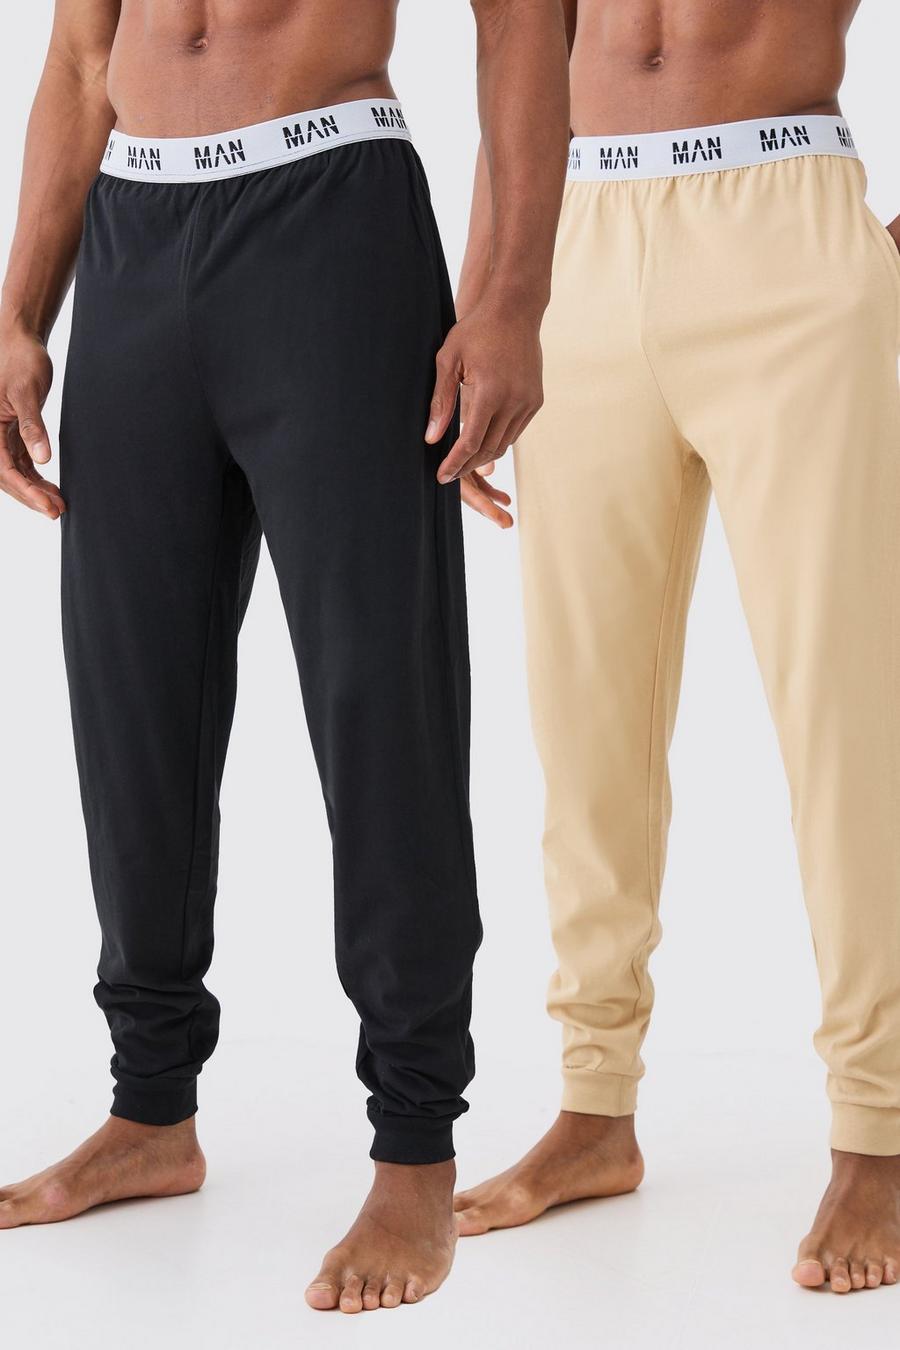 Pantaloni tuta Man Loungewear con polsini alle caviglie - set di 2 paia, Multi